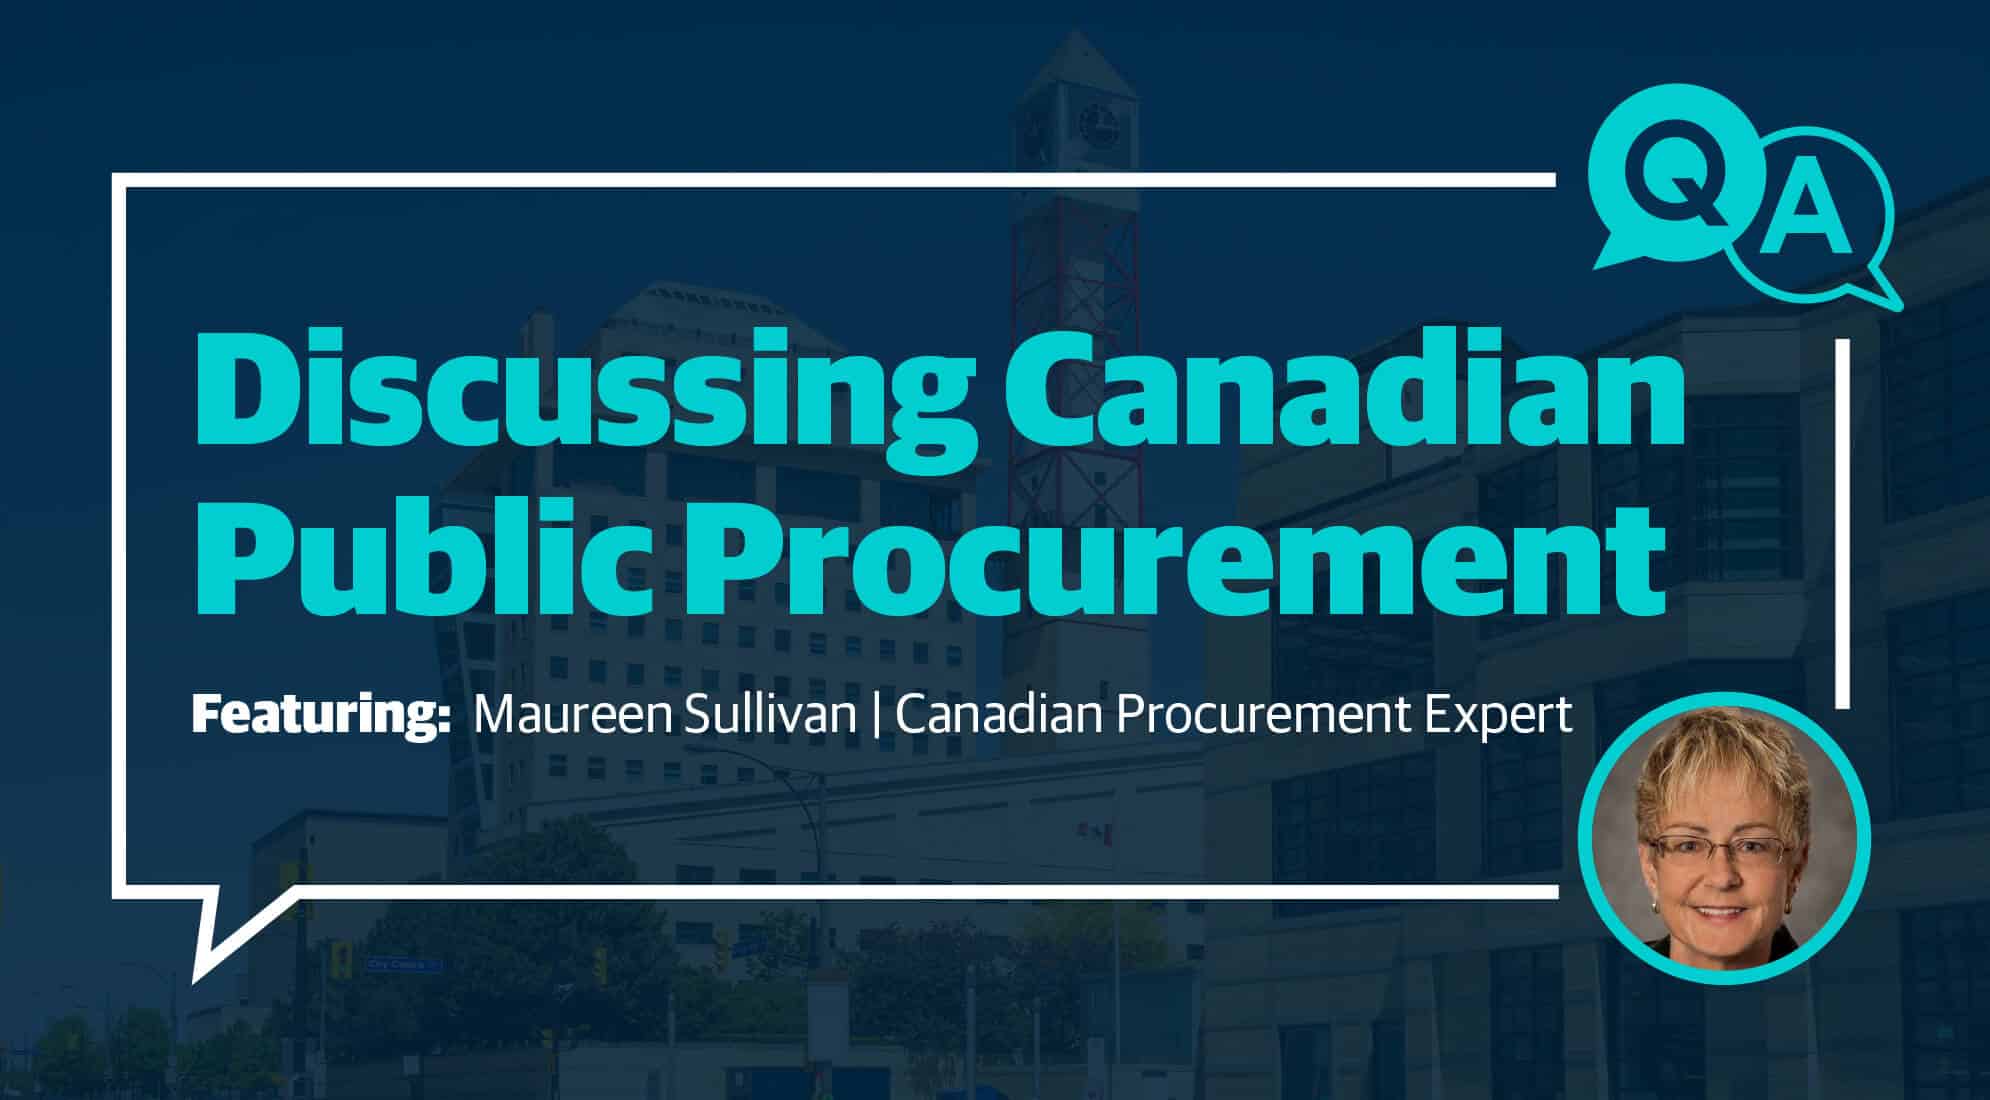 Reflecting on Canadian Public Procurement